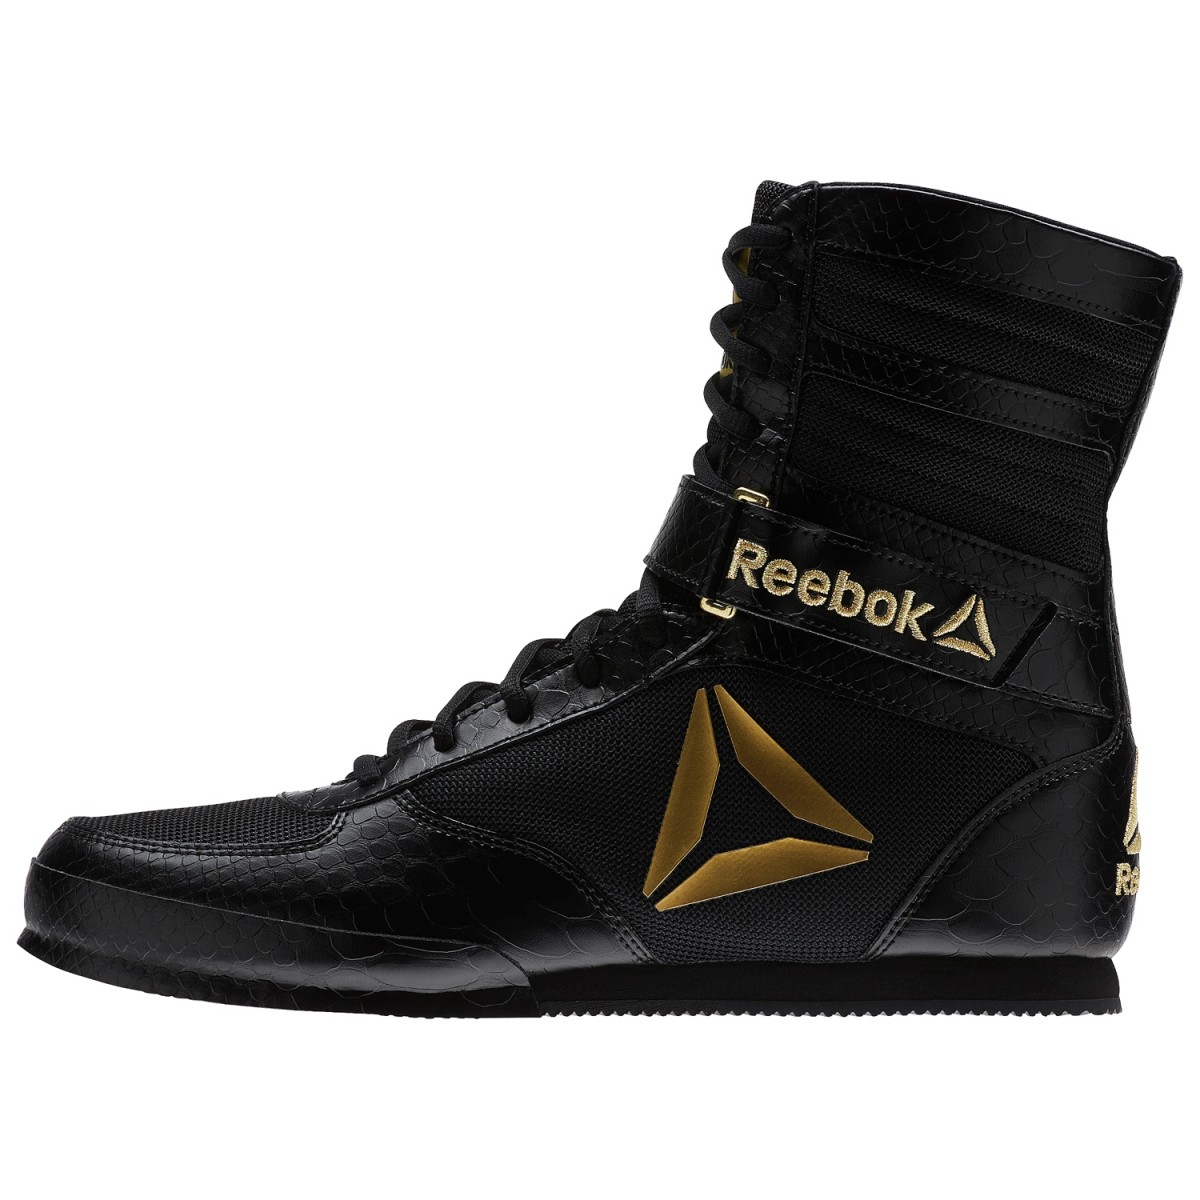 Women's Reebok Renegade Pro Boxing Boots - Black/Gold